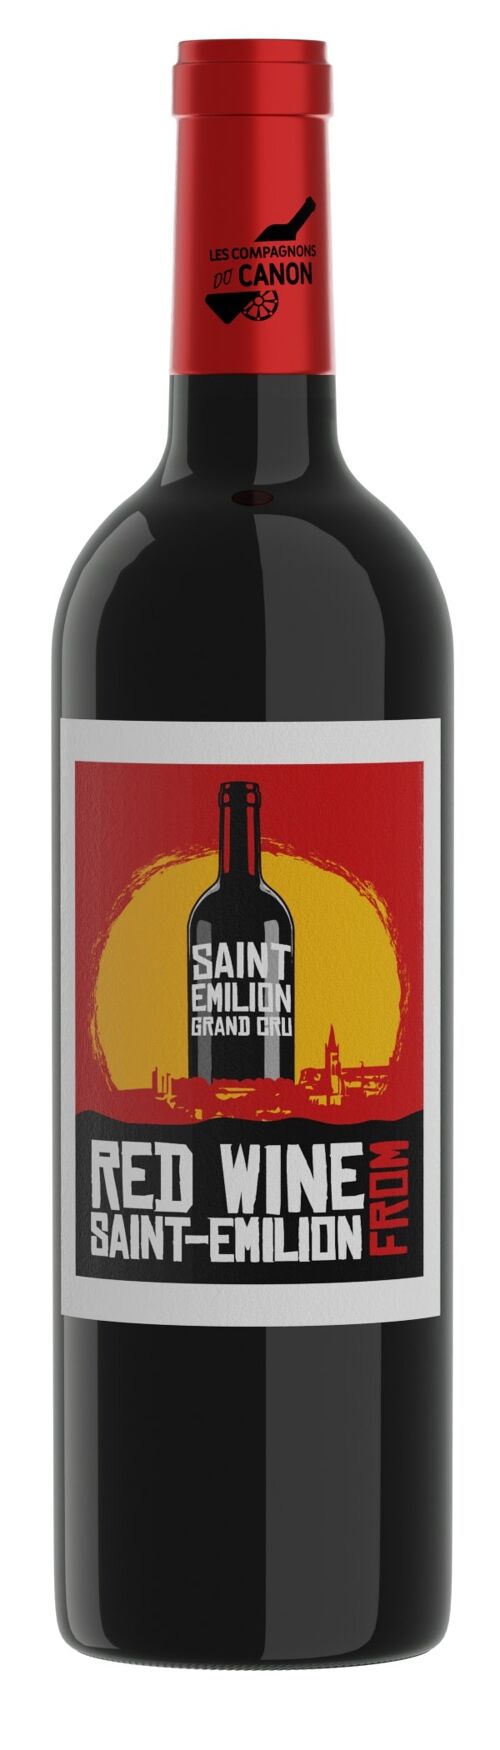 Red Wine from Saint-Emilion 2020 – Saint-Emilion Grand Cru